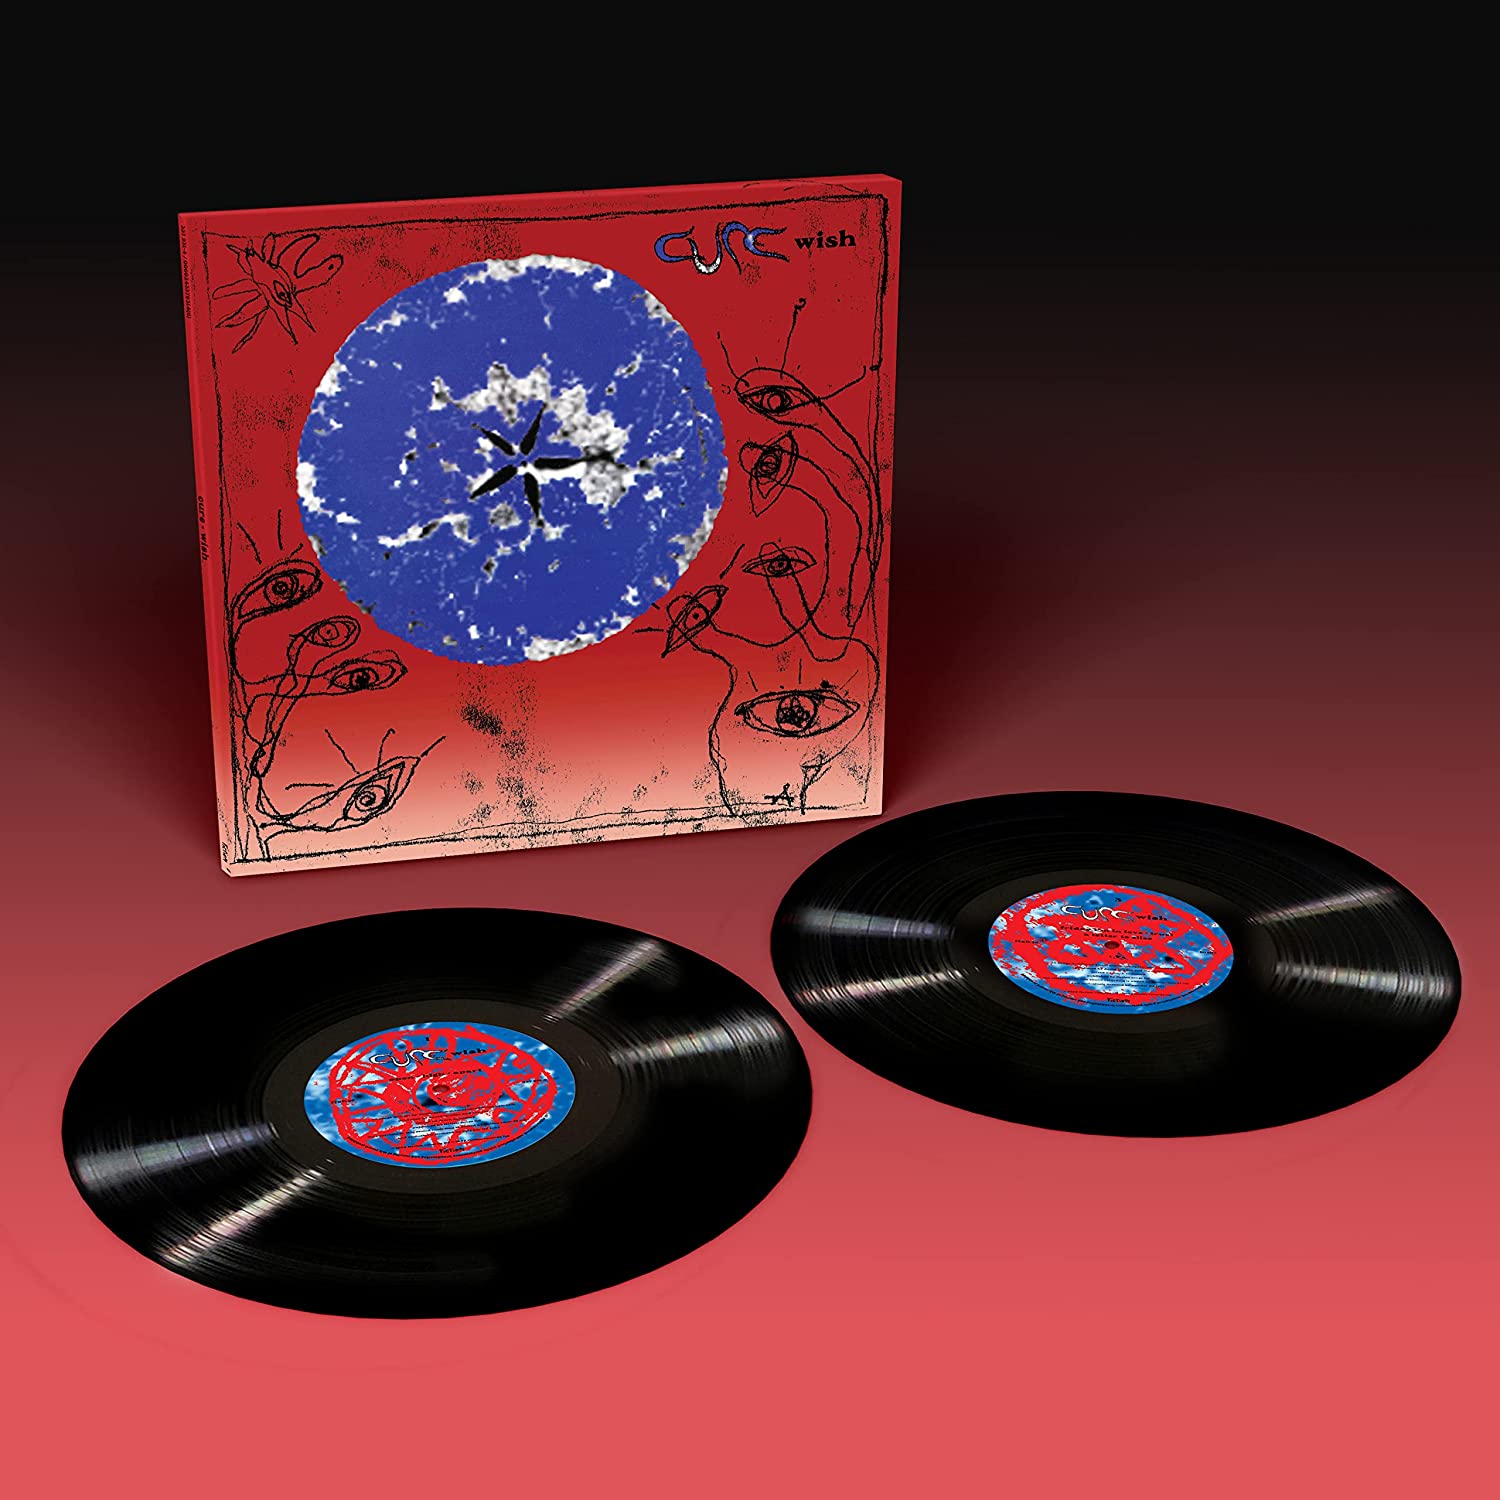 The Cure Wish 30 Anniversary Vinyl LP